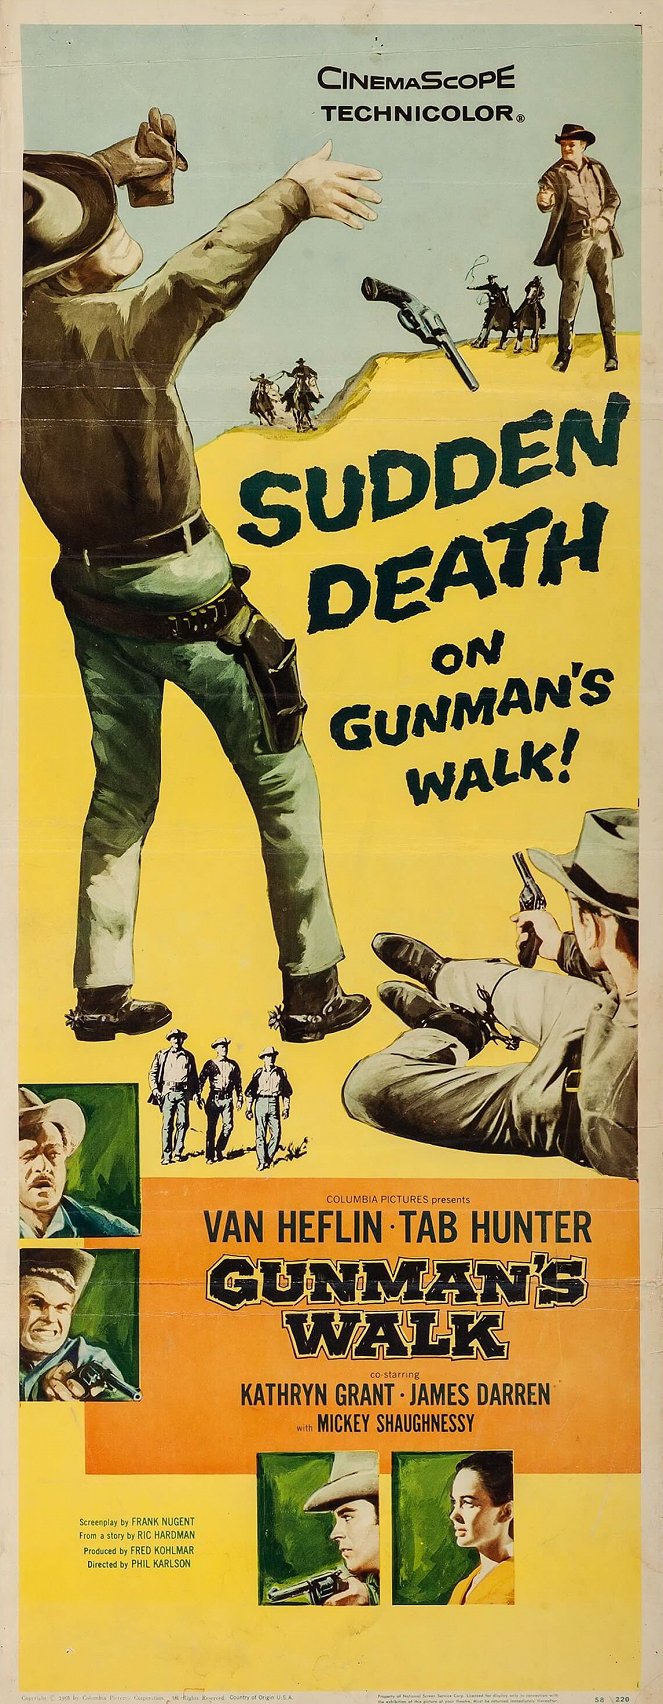 Gunman's Walk - Posters